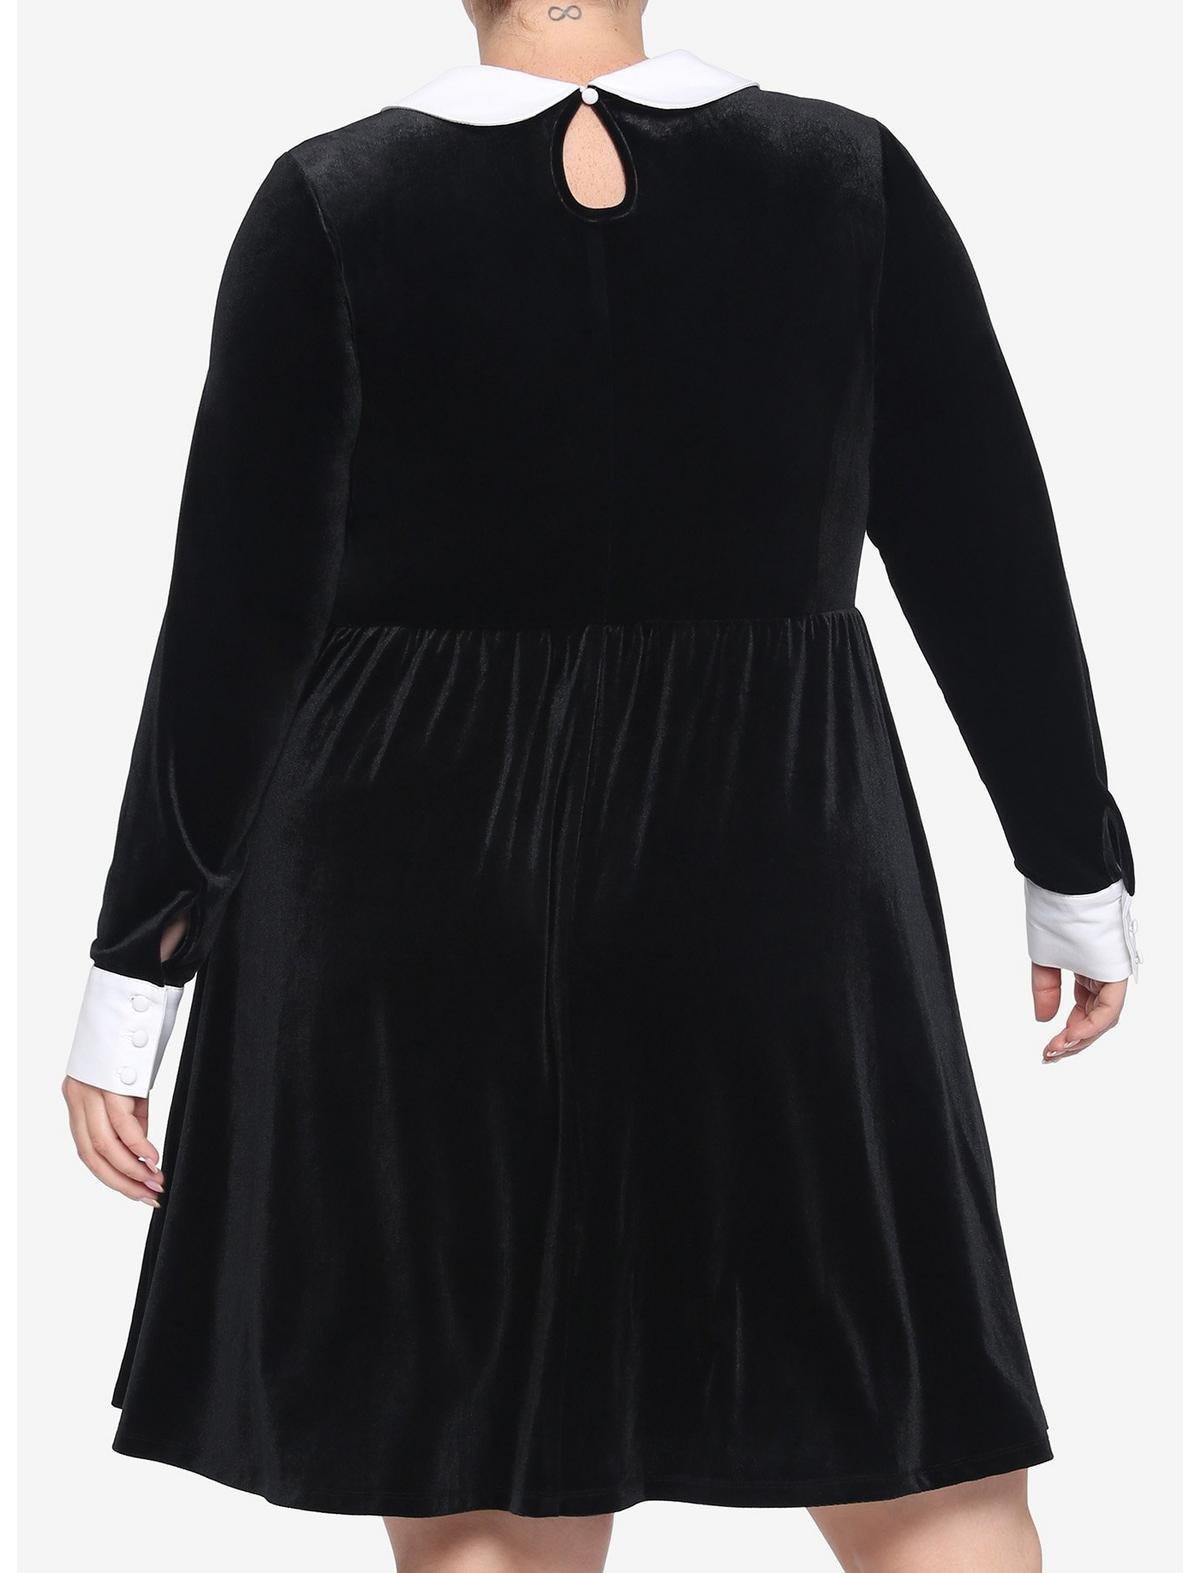 Black Velvet Cuffs & Collar Long-Sleeve Dress Plus Size, BLACK, alternate